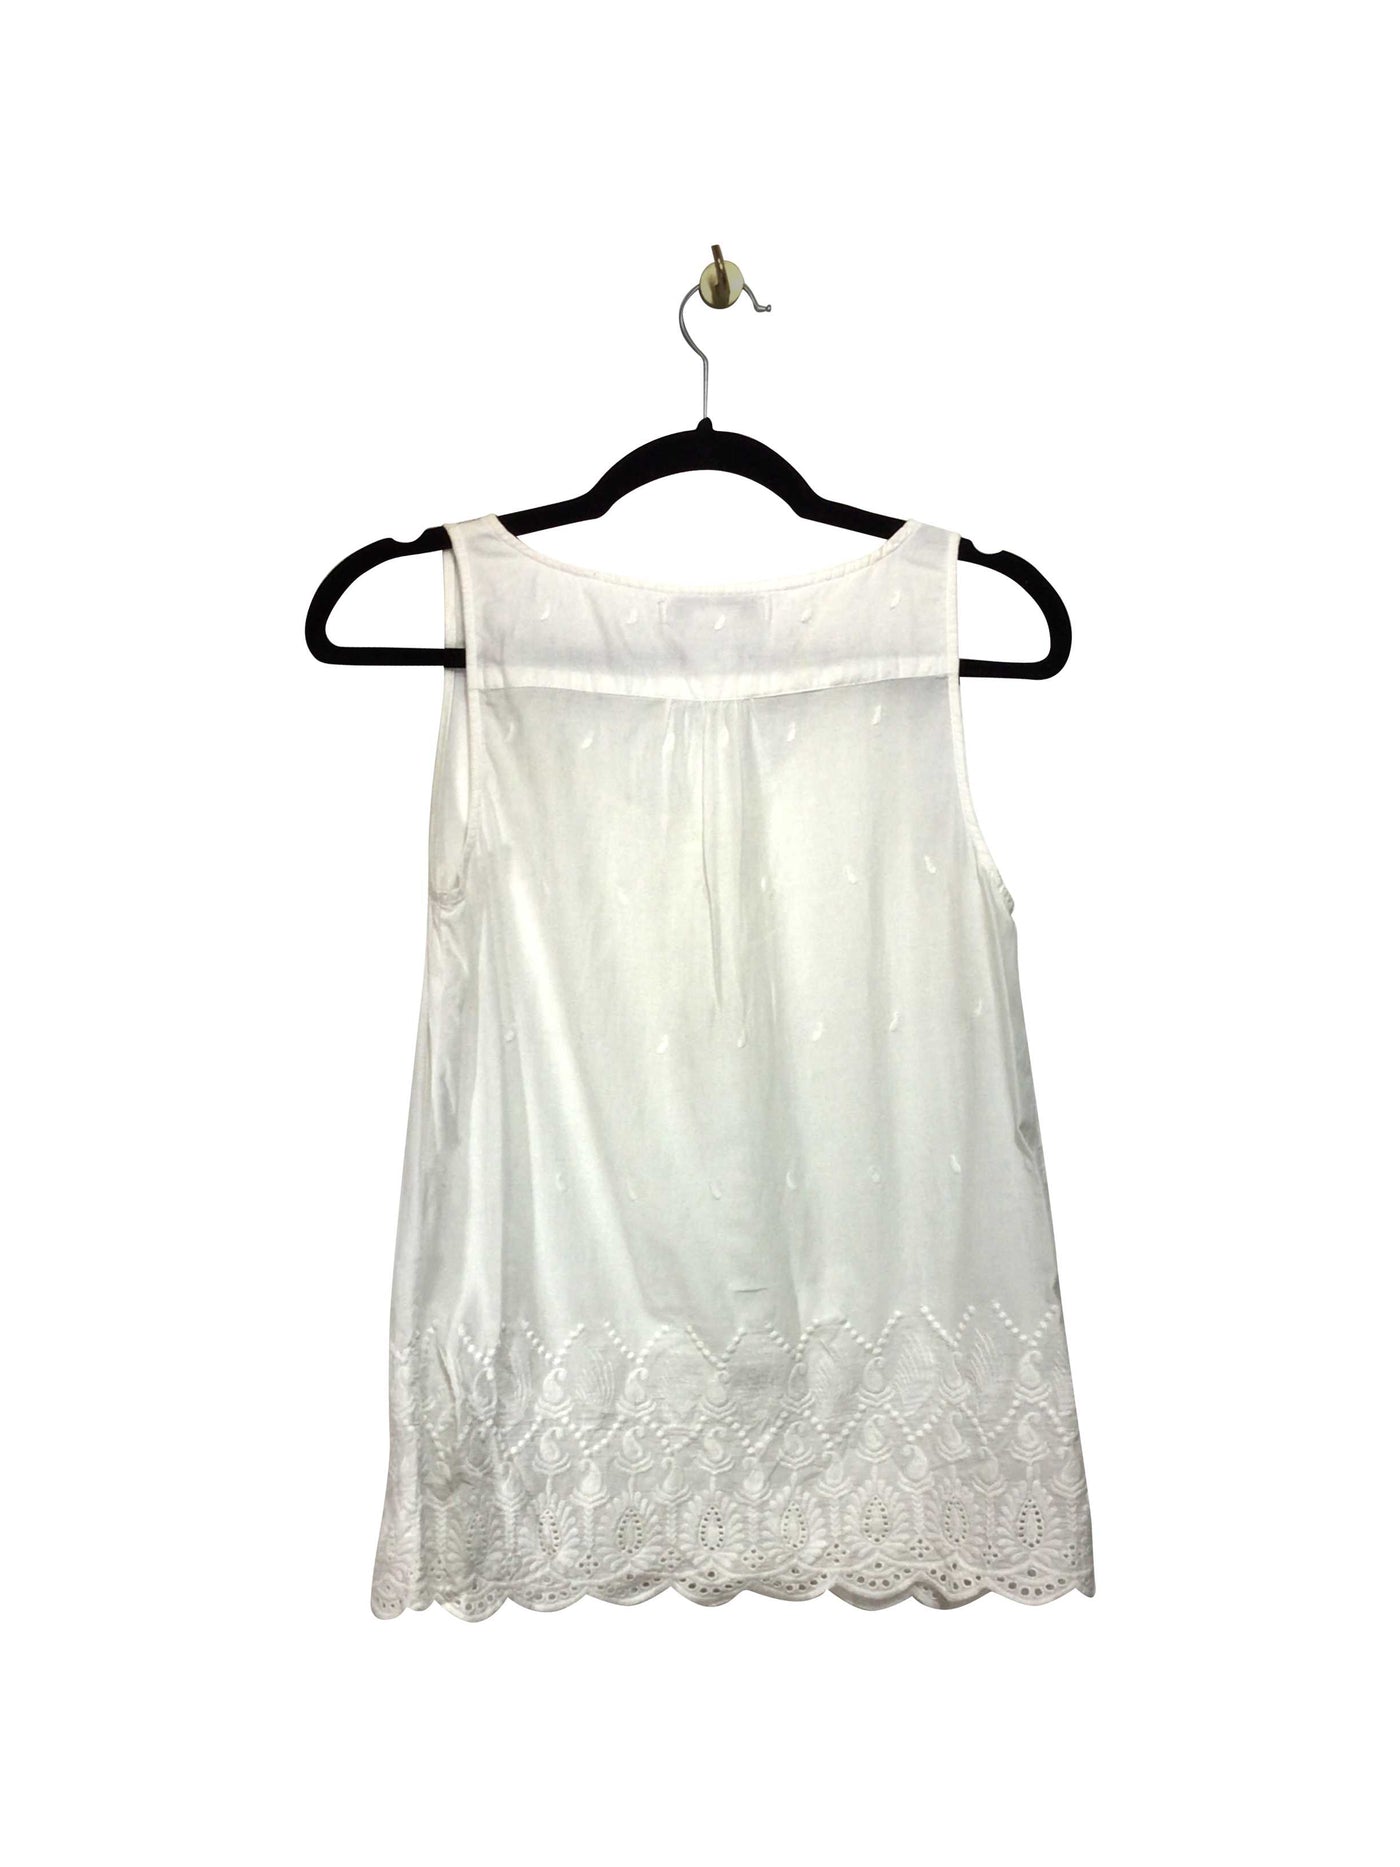 MARISA CHRISTINA Regular fit Blouse in White  -  XS  13.25 Koop